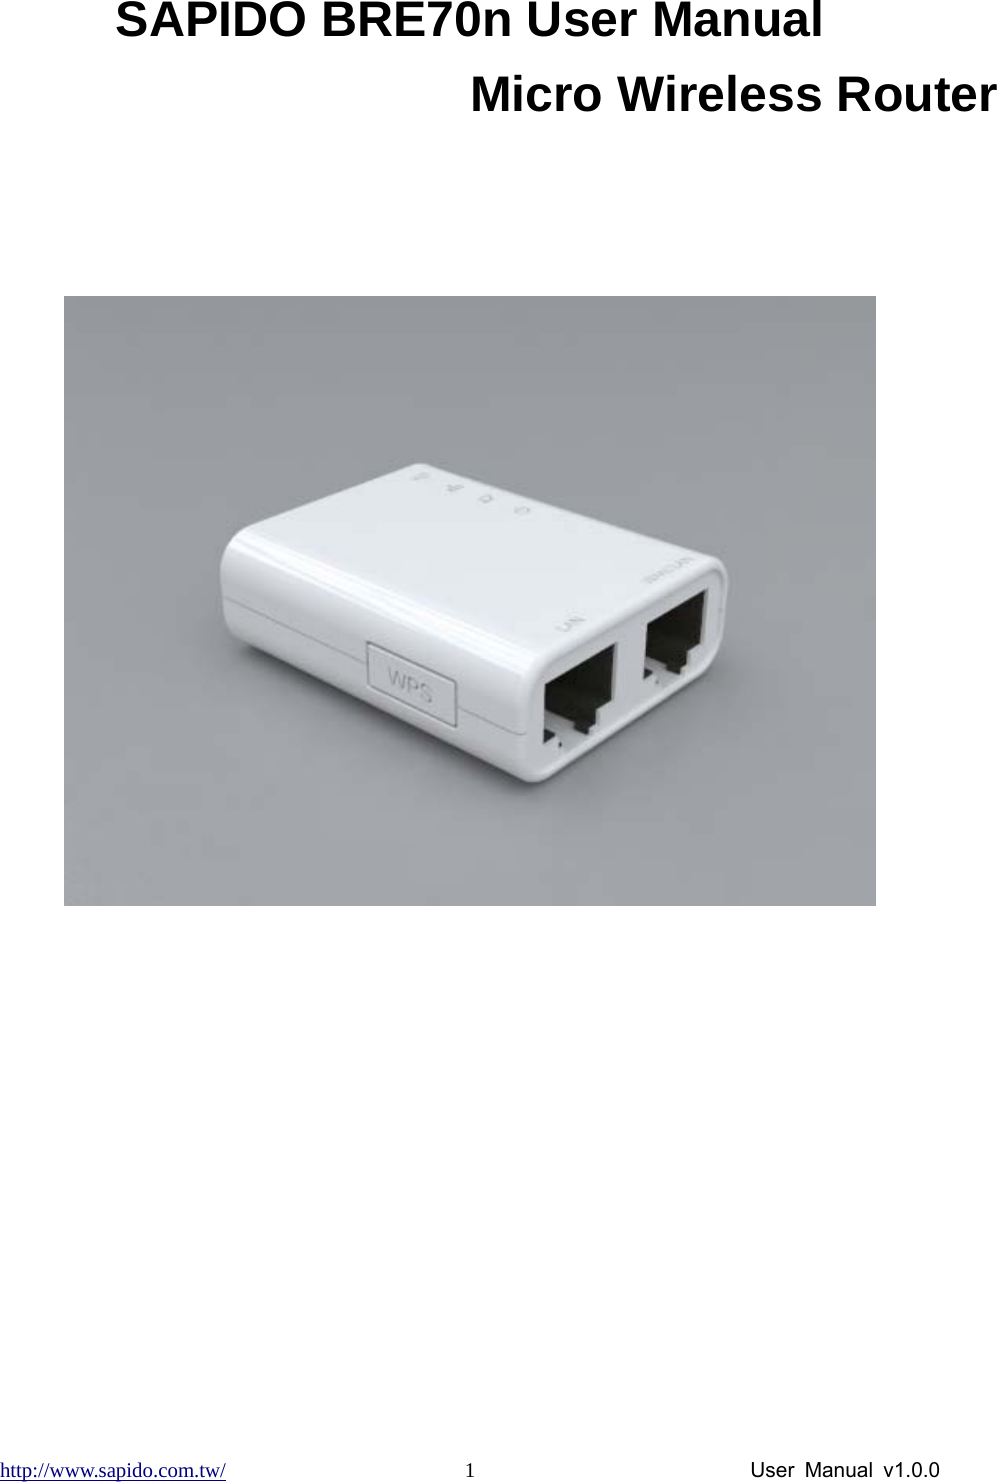 http://www.sapido.com.tw/                User Manual v1.0.0 1SAPIDO BRE70n User Manual   Micro Wireless Router   